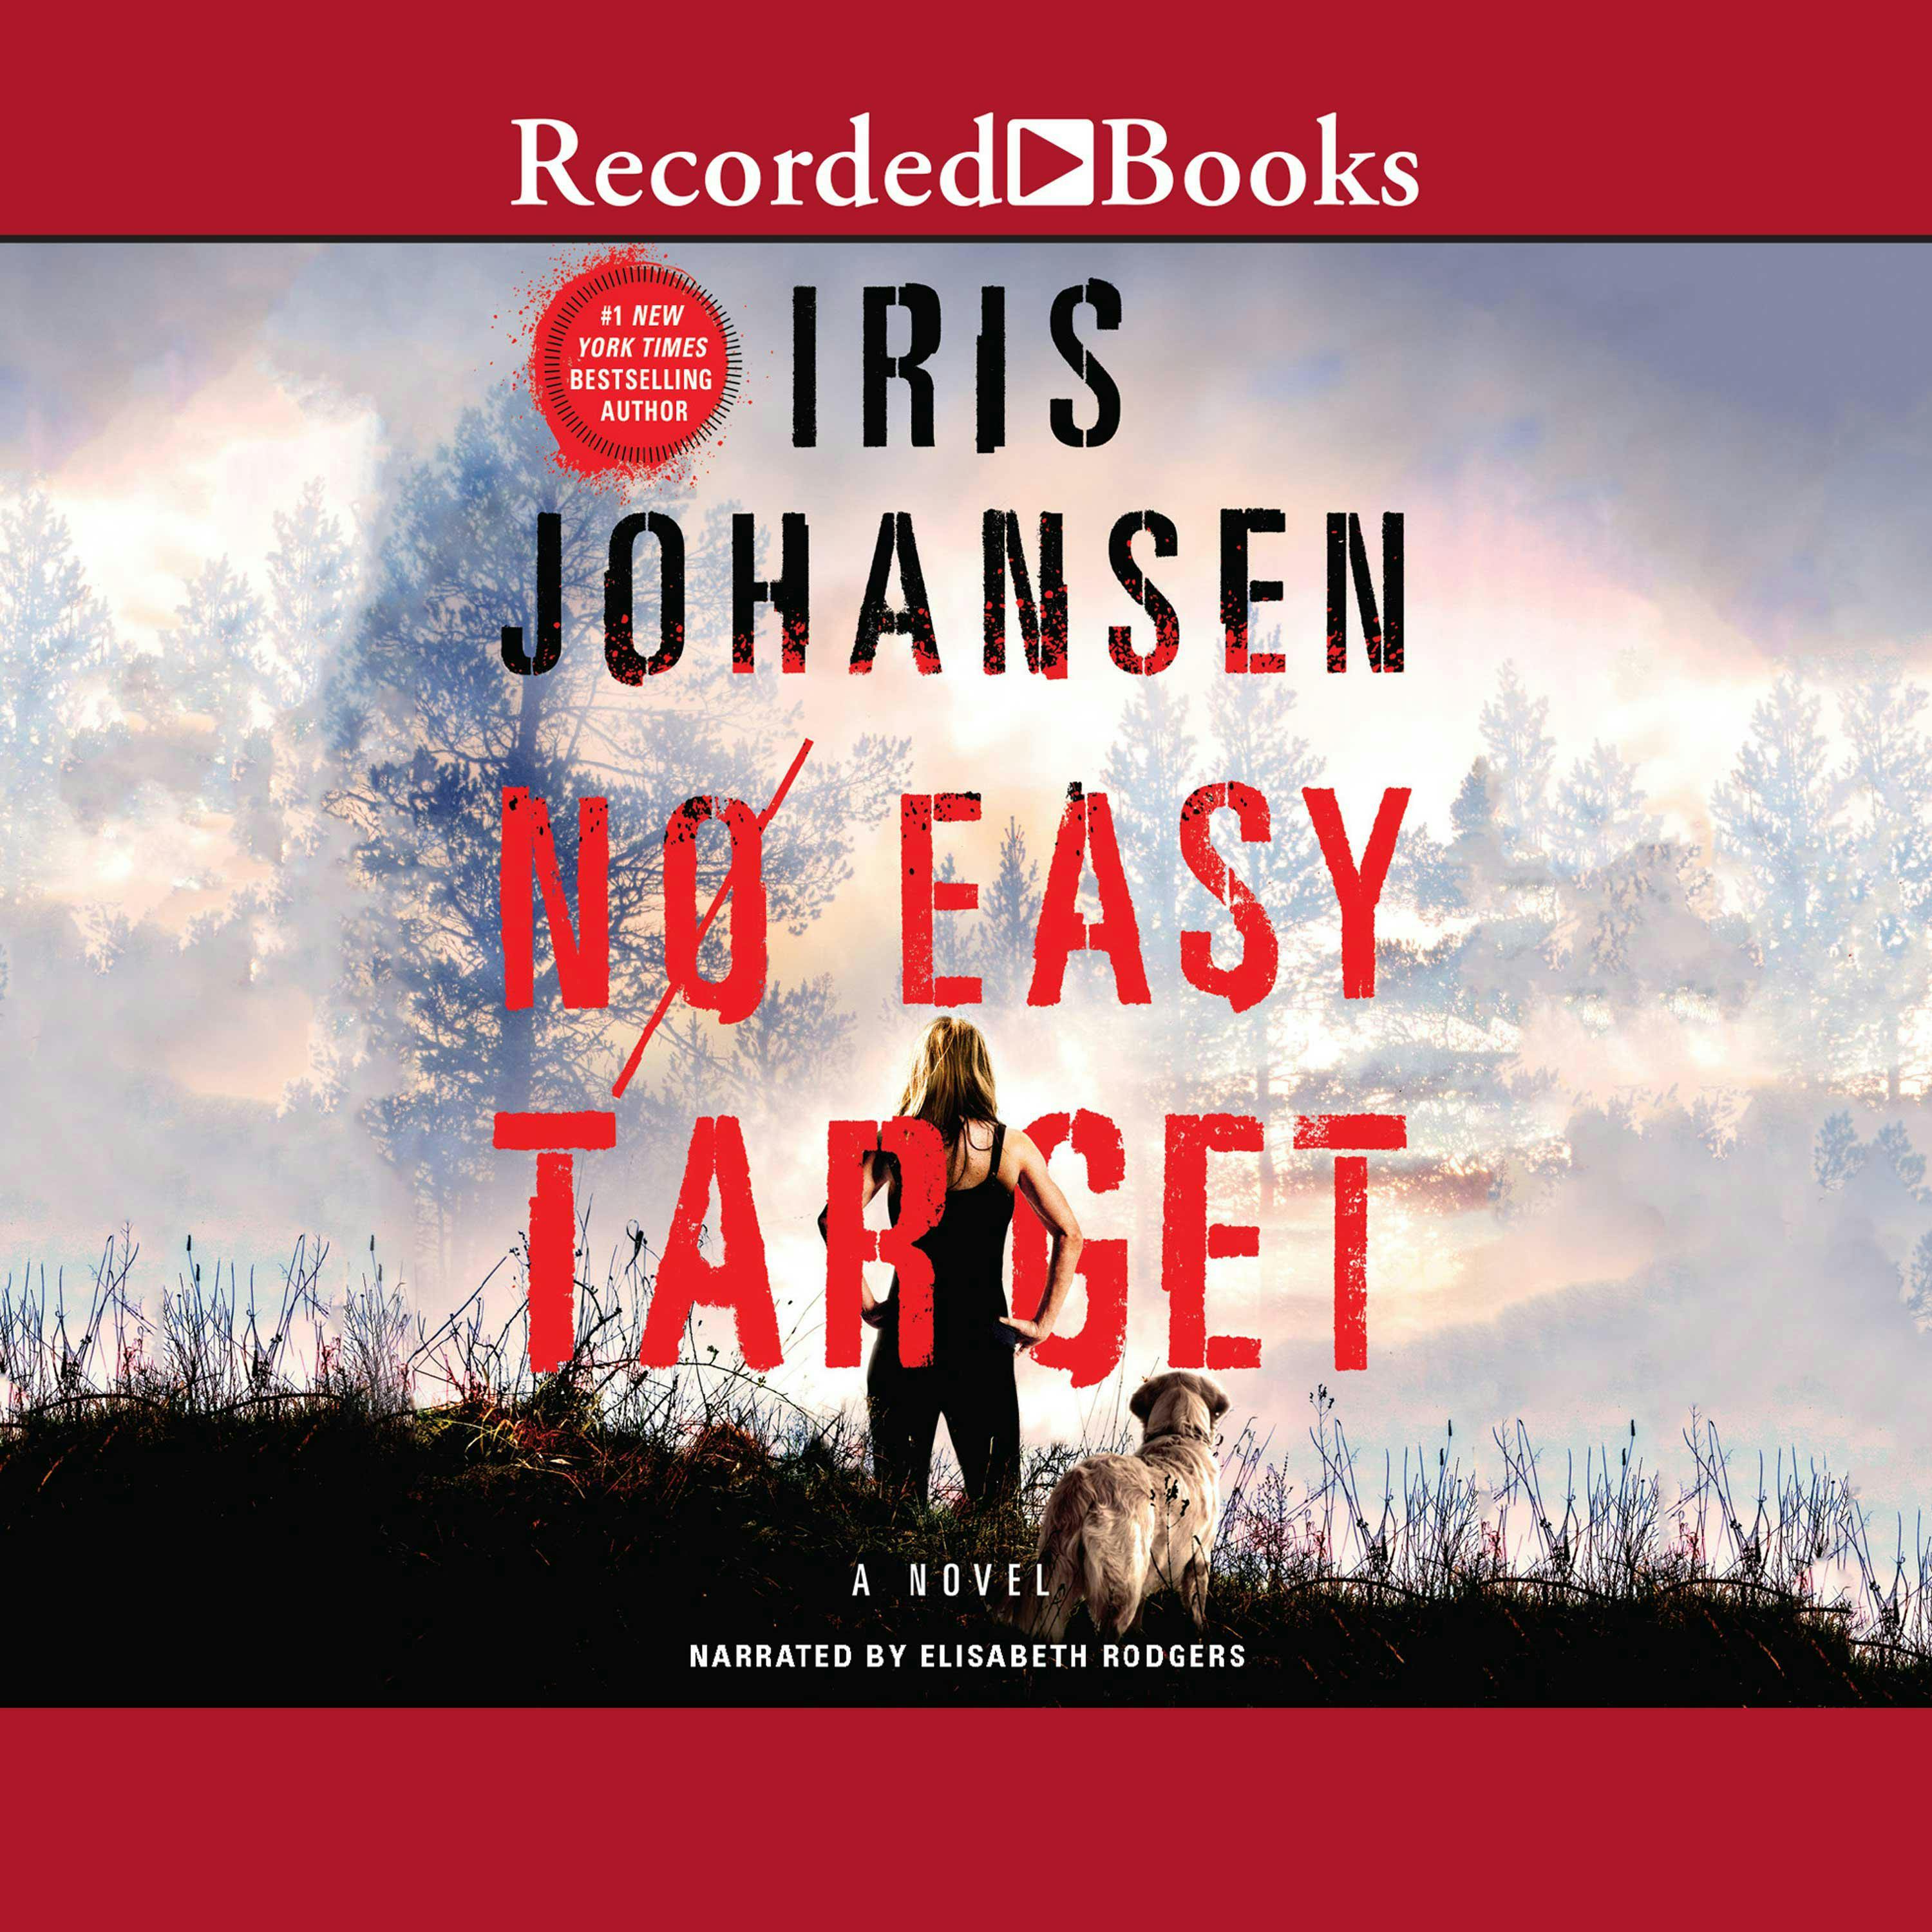 No Easy Target - Iris Johansen